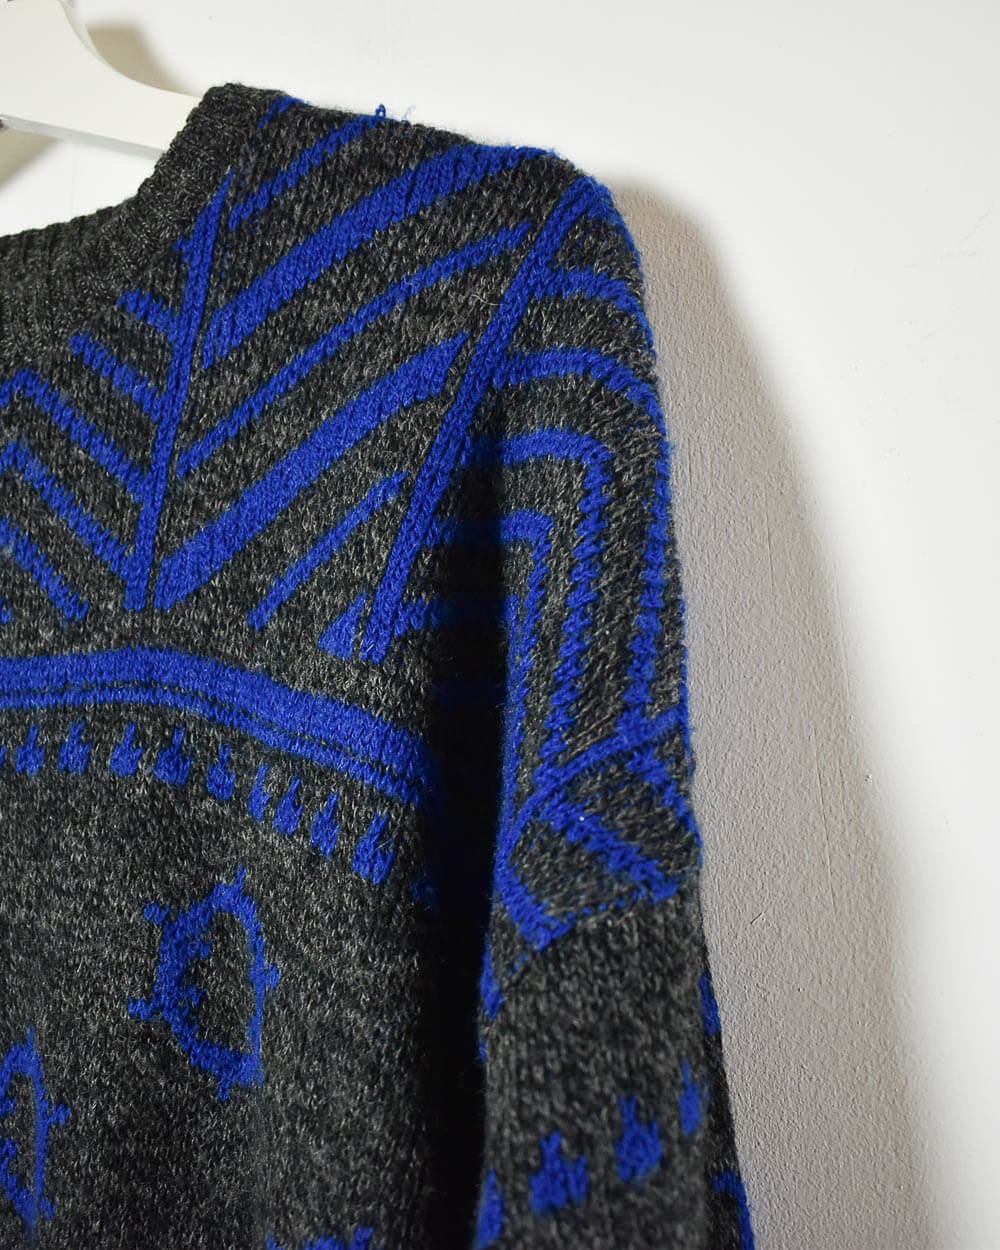 Neutral Vintage Knitted Sweatshirt - Medium